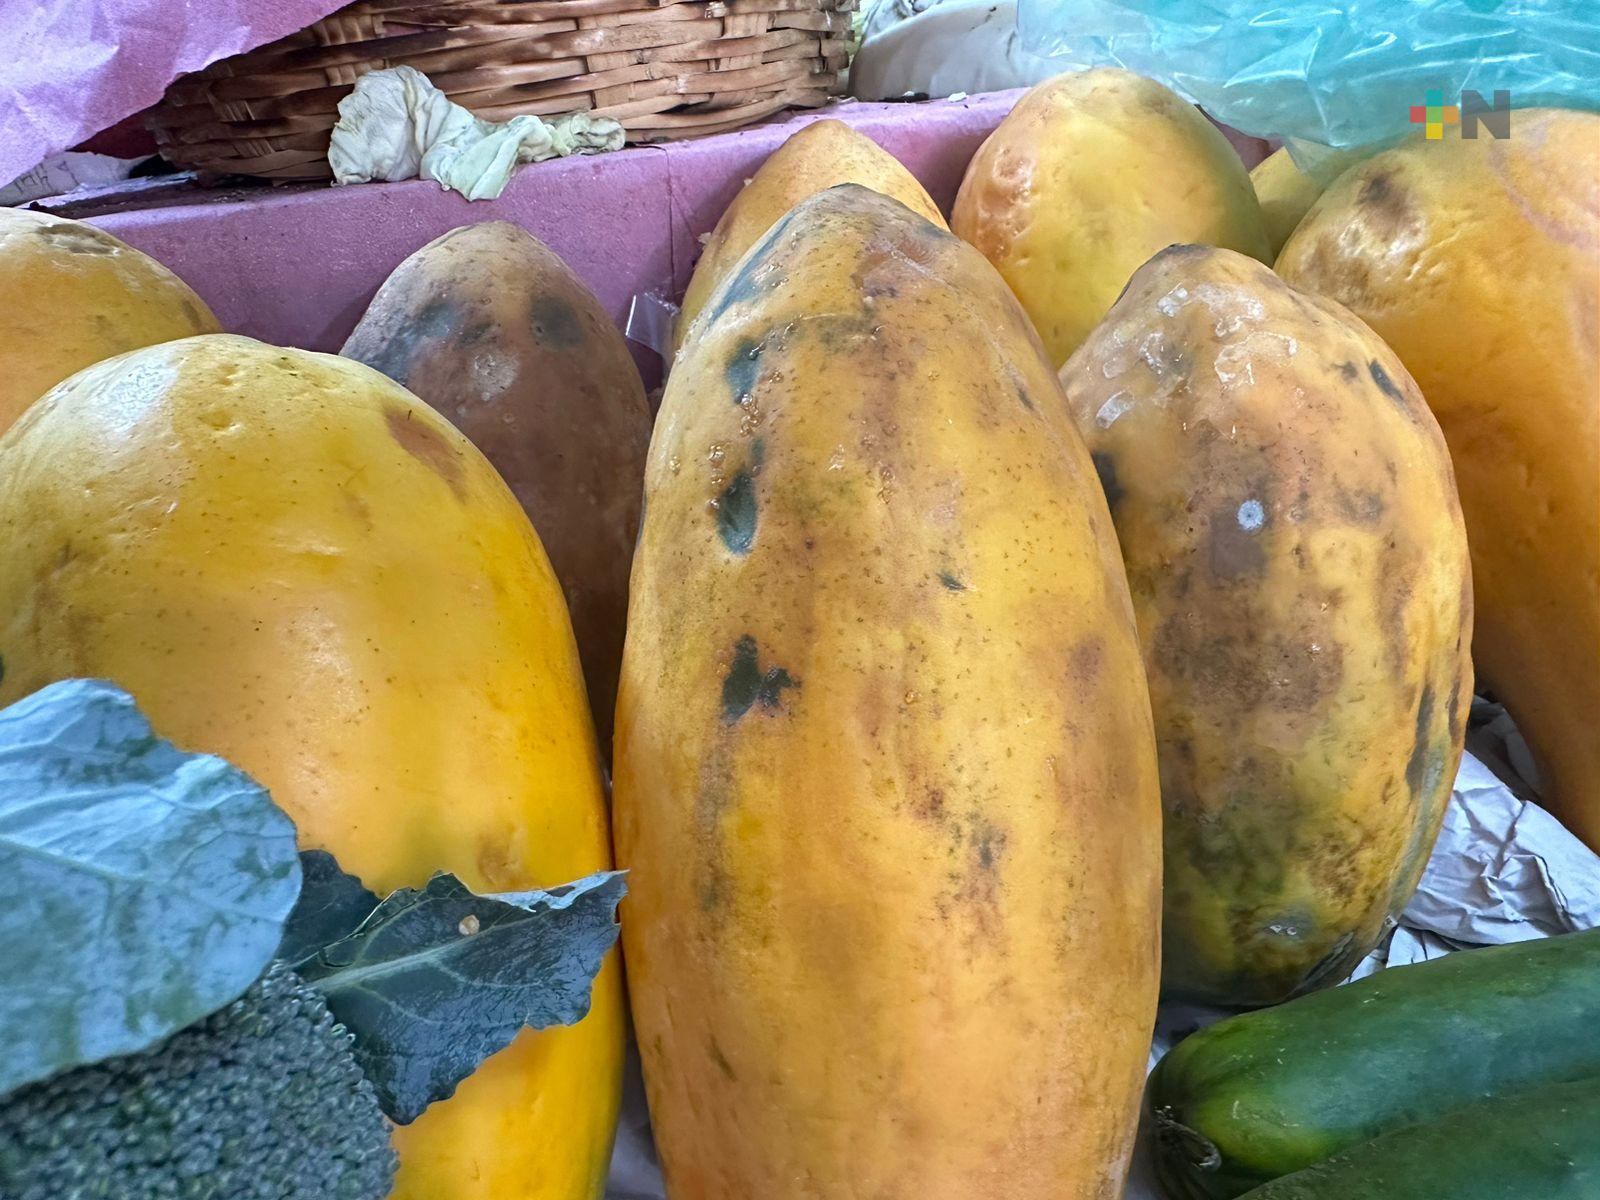 En Coatza, comerciantes de fruta disminuyen oferta para evitar pérdidas